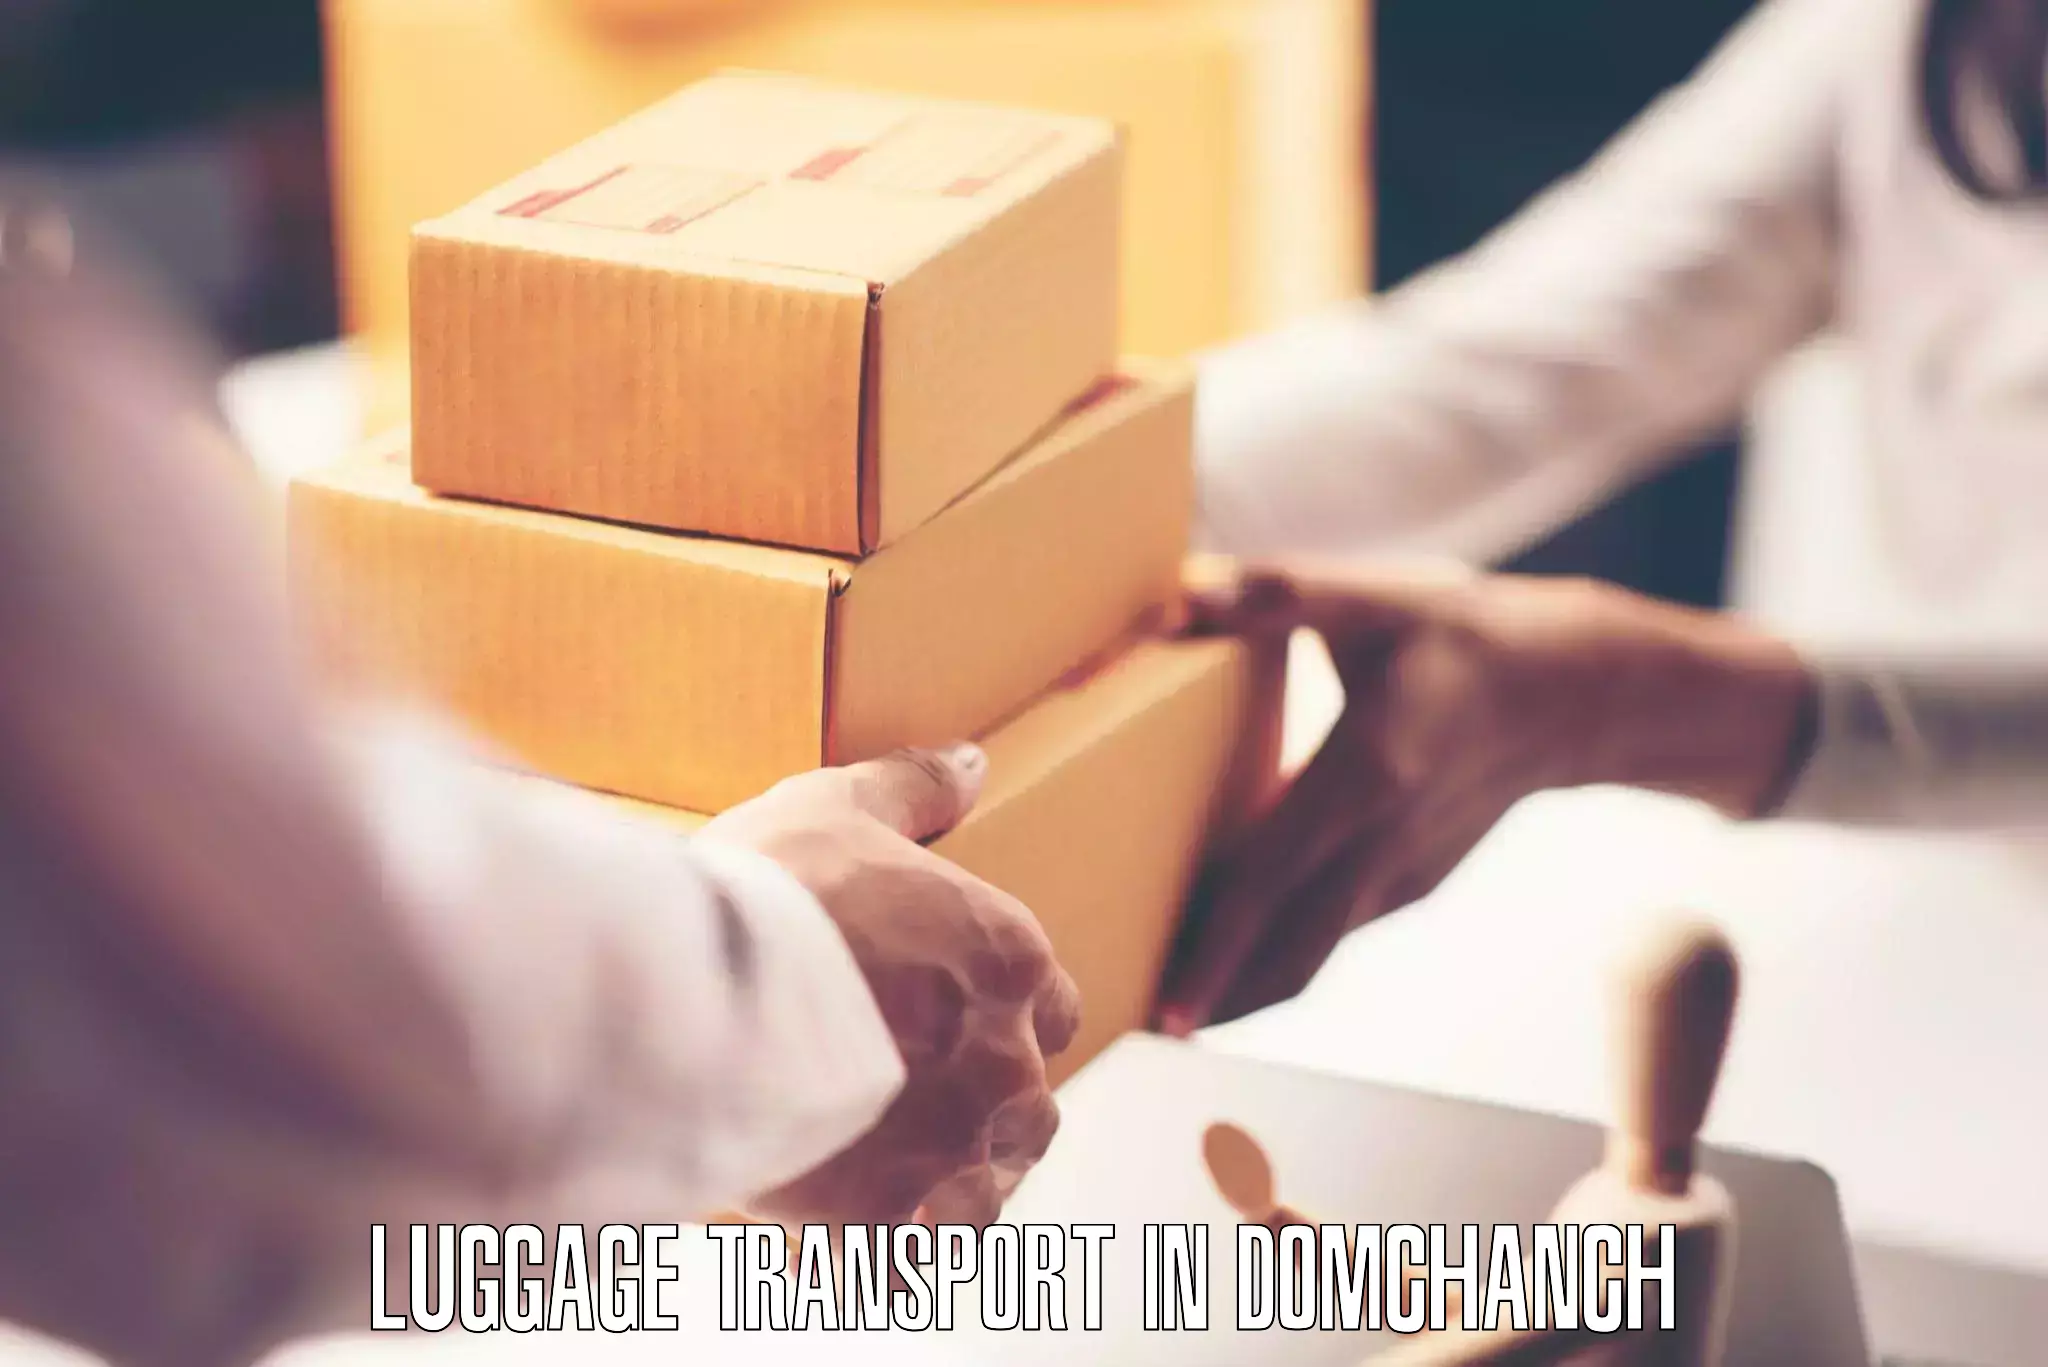 Luggage shipment logistics in Domchanch